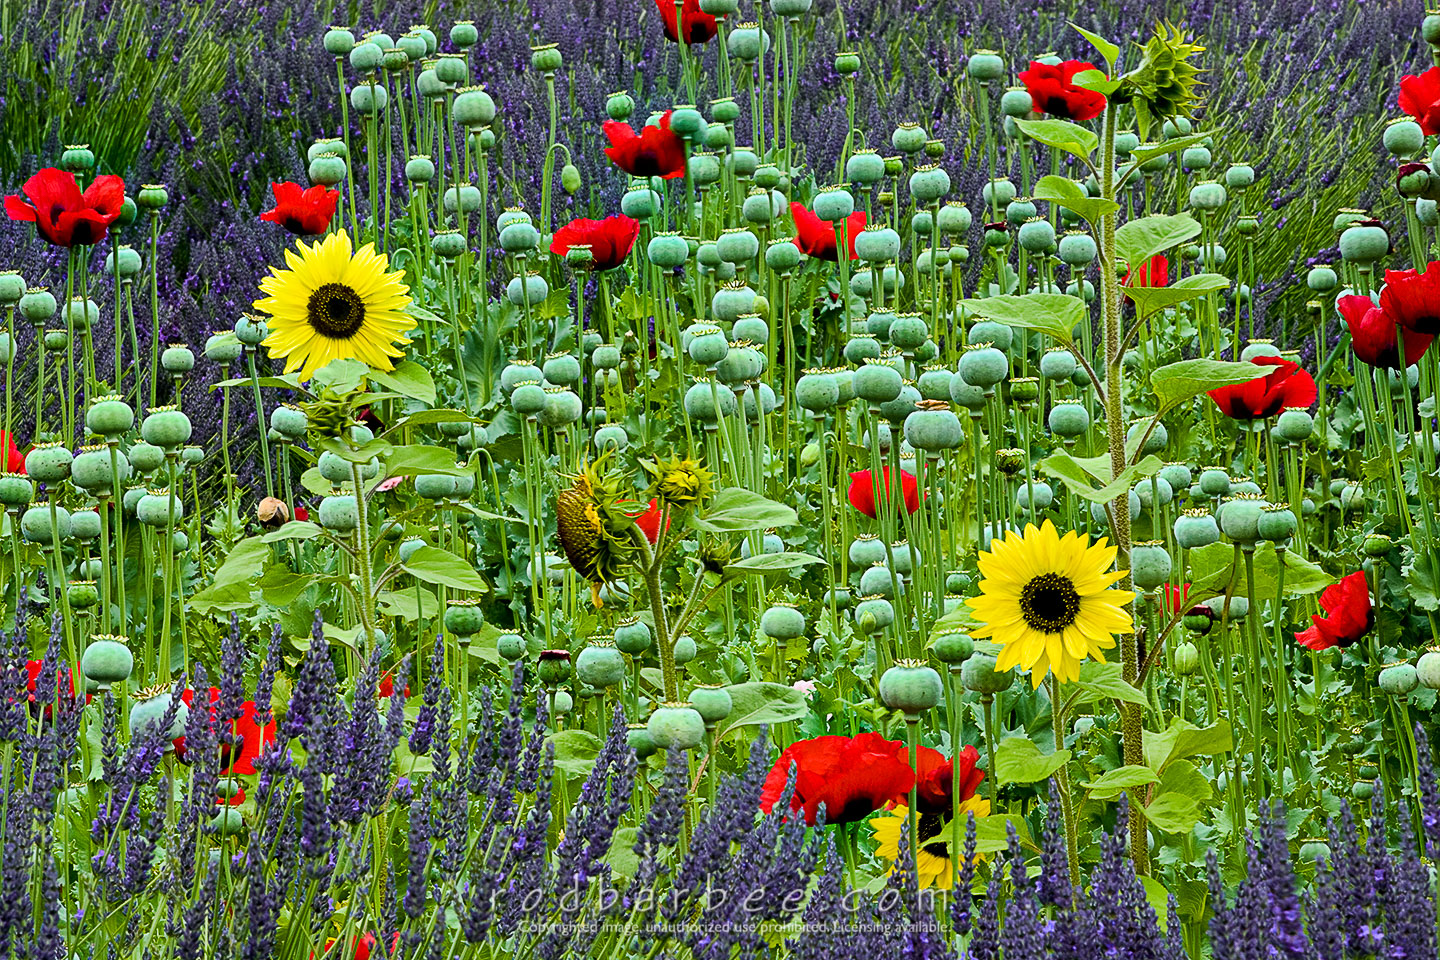 Barbee_070713_2_9993_4x6 |  Sunflowers, poppies, and lavender, Jardin du Soliel Lavender Farm, Sequim, WA